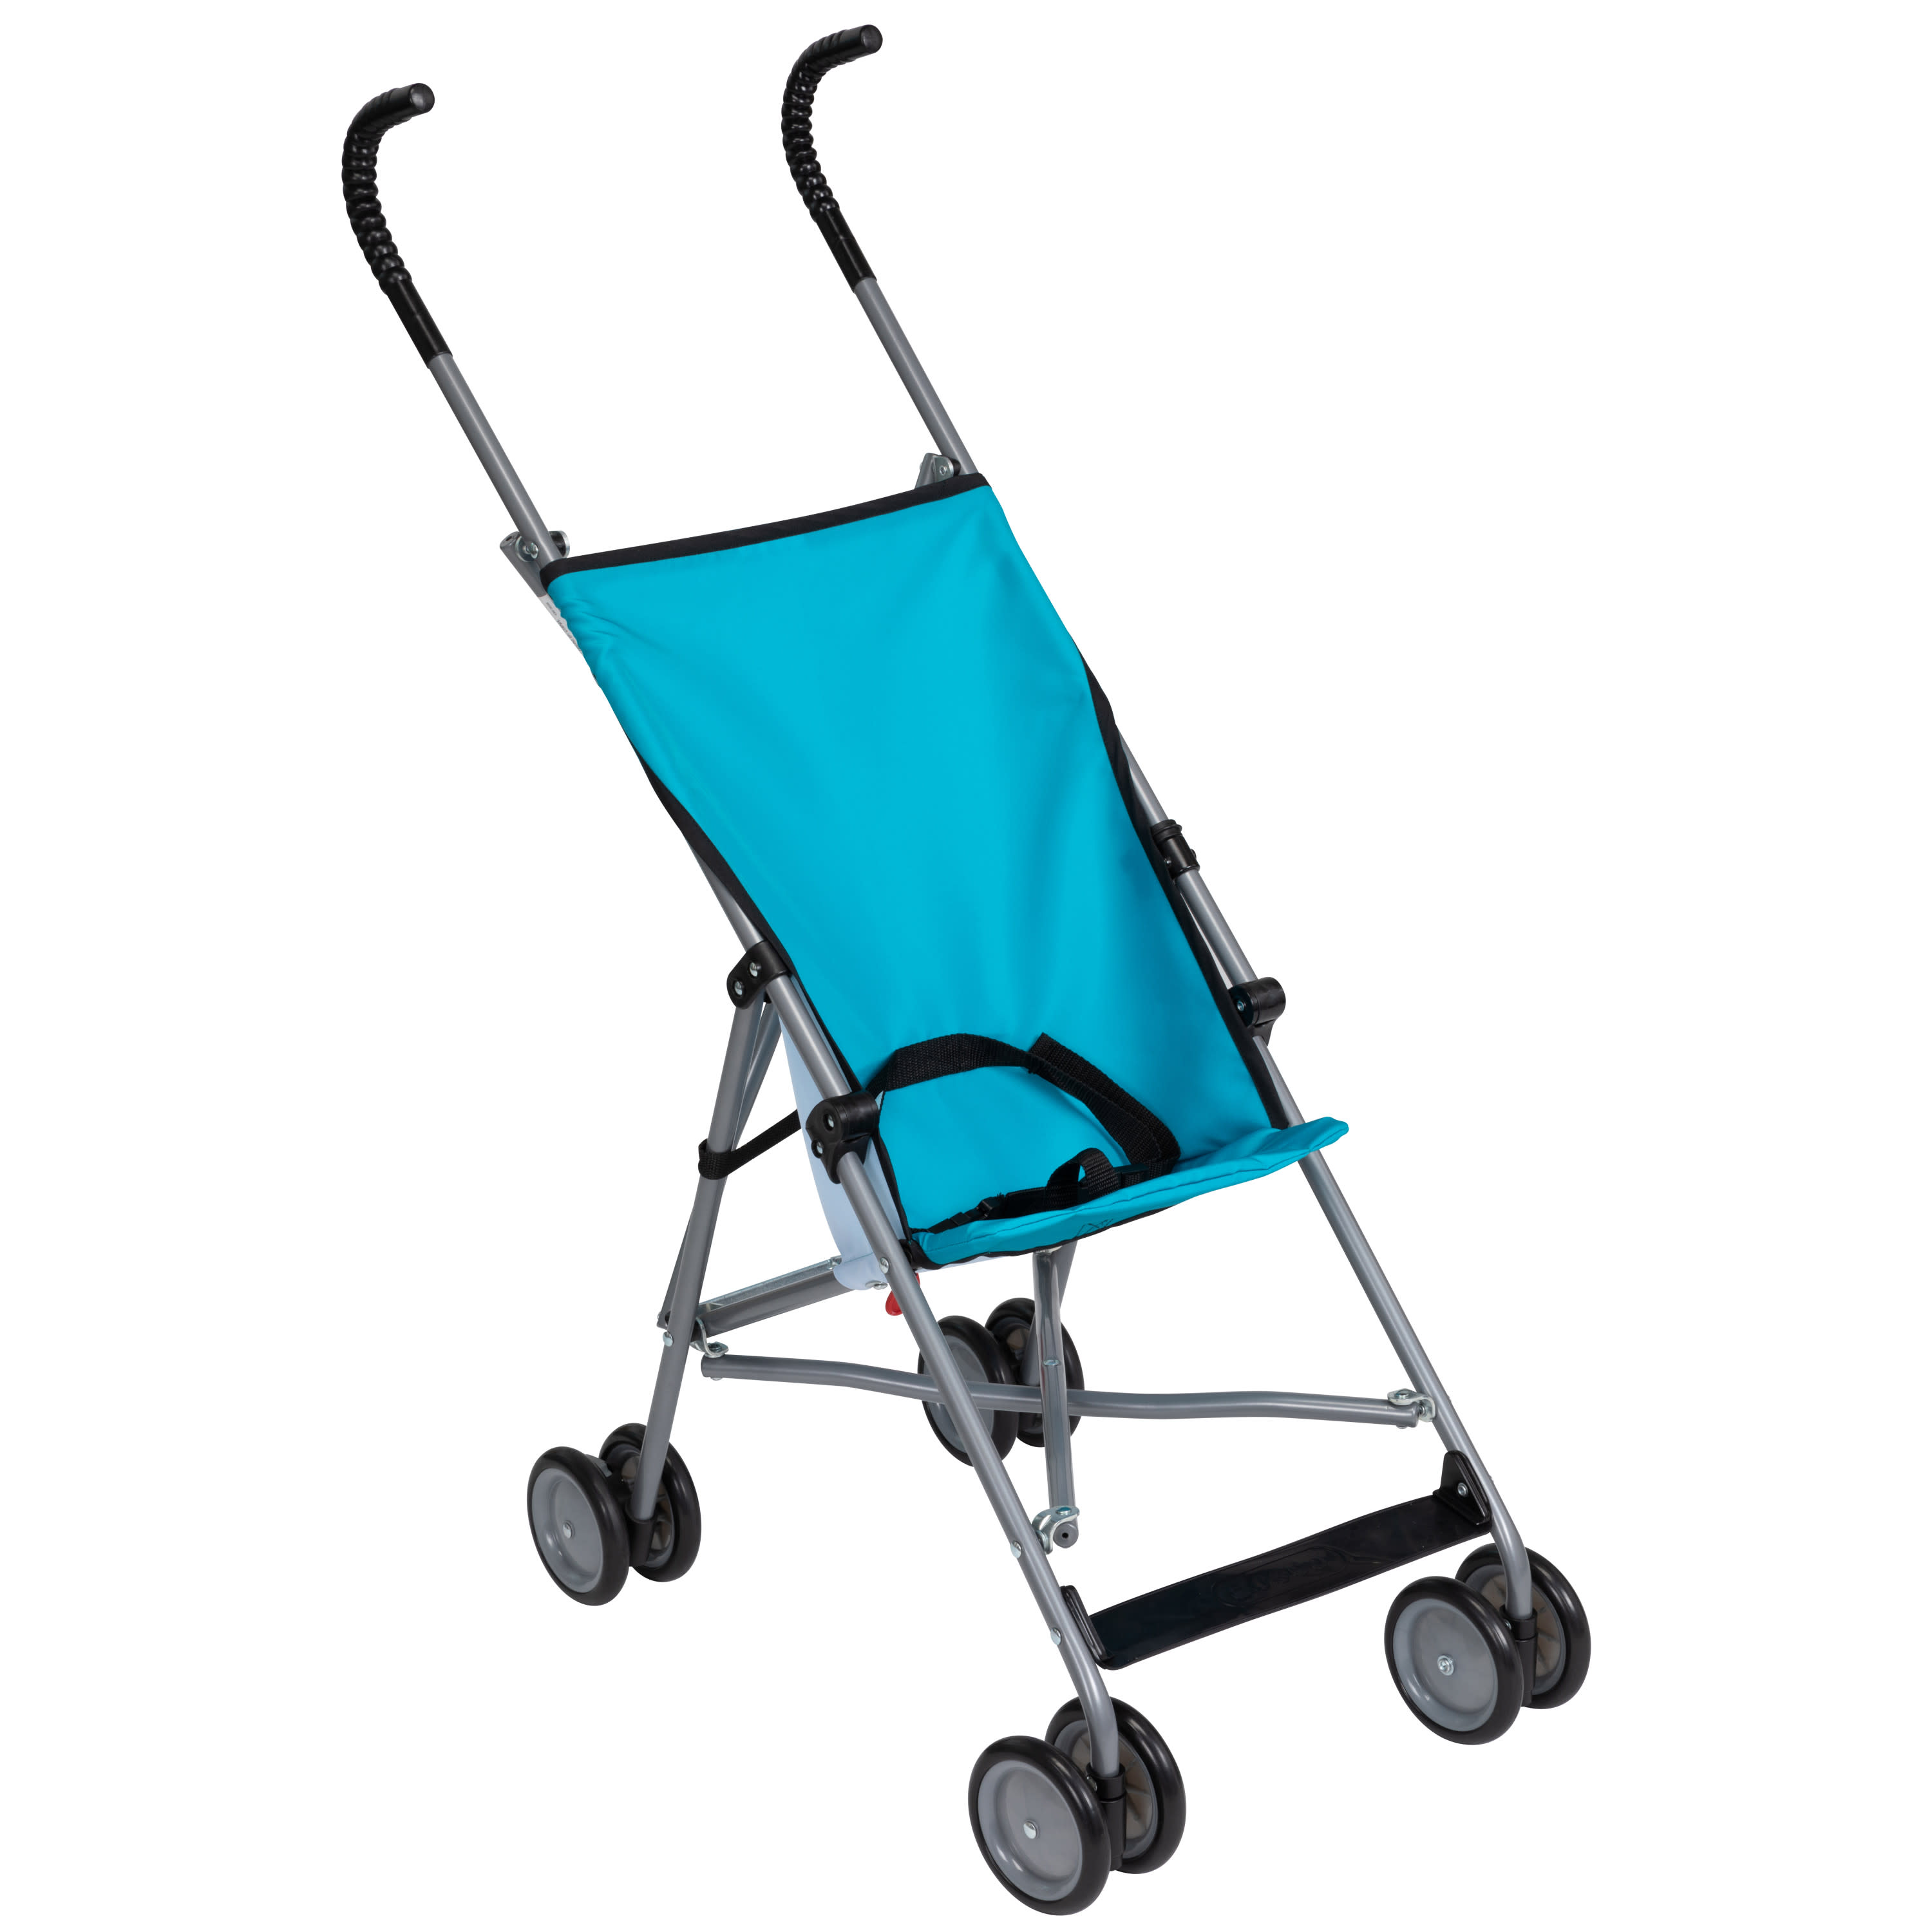 Cosco Kids Comfort Height Umbrella Stroller, Freshwater Turquoise - image 4 of 8